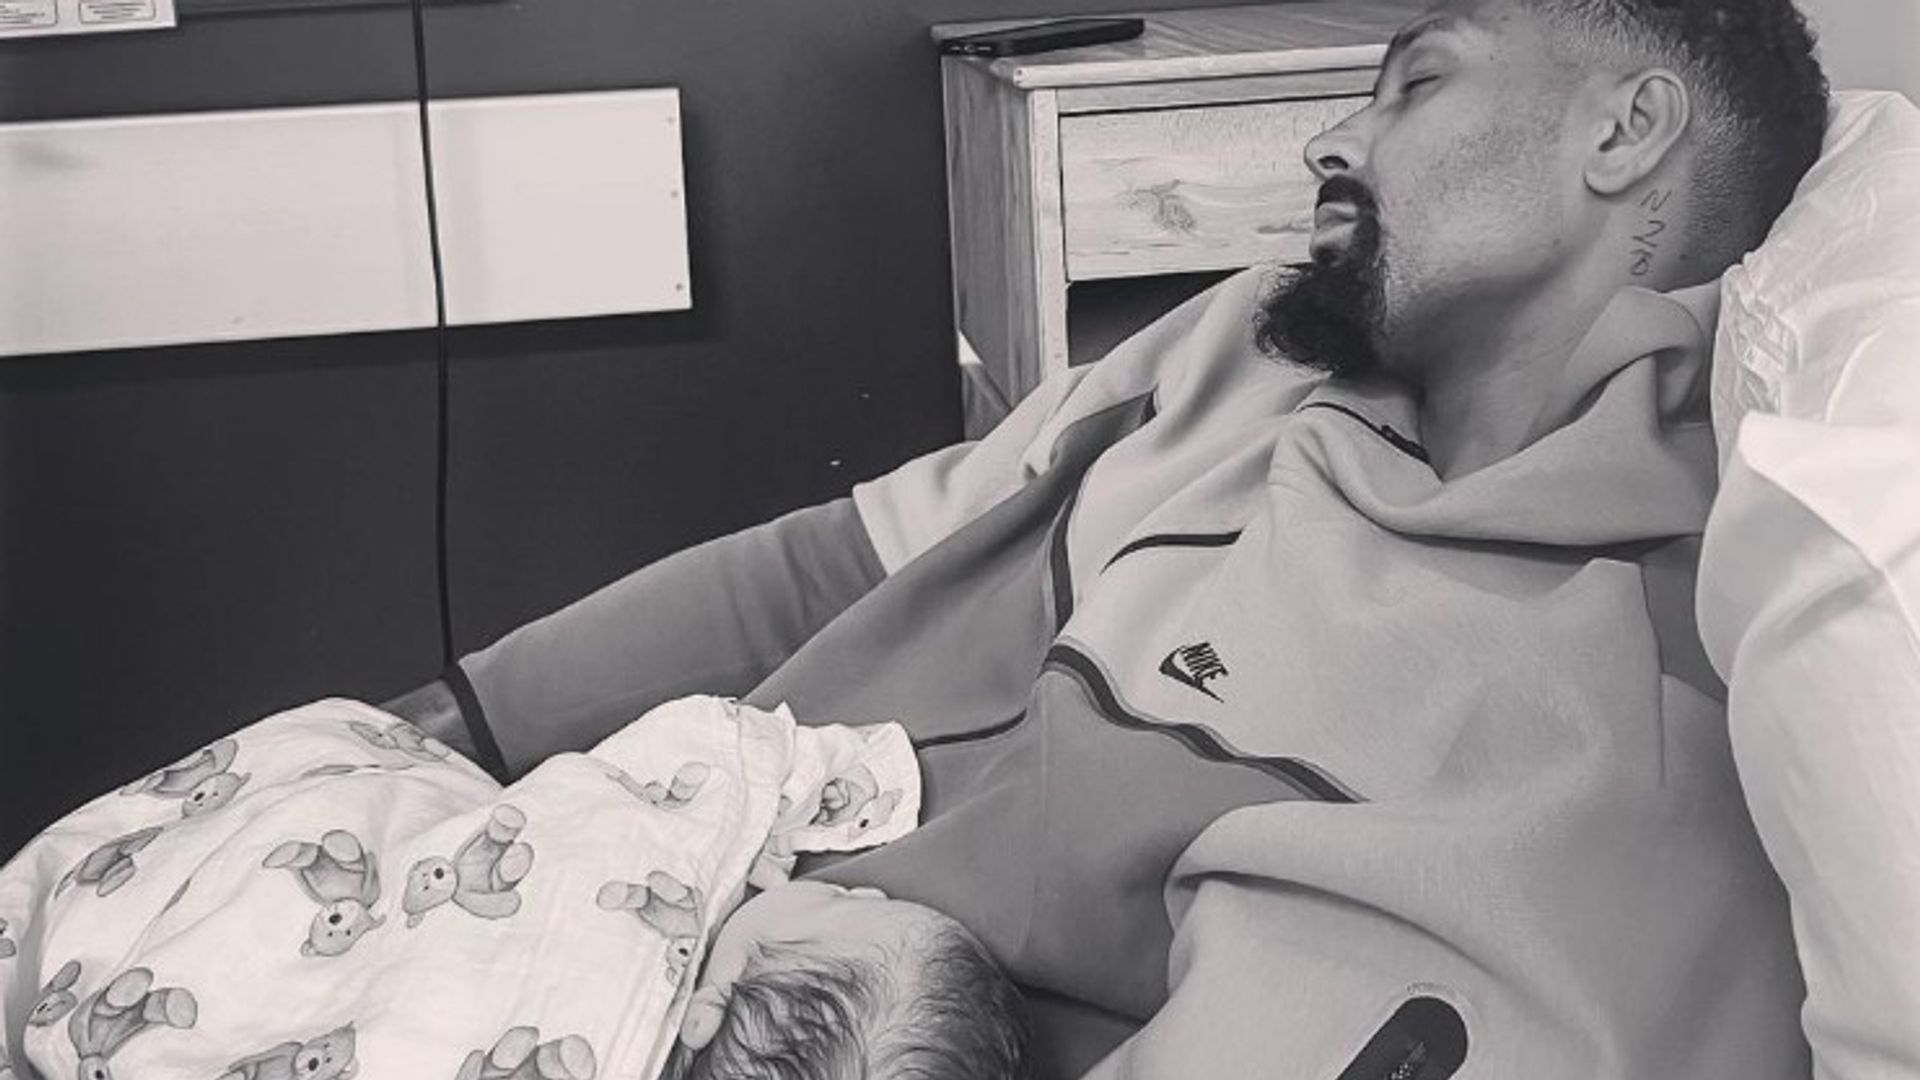 Jordan Banjo with his baby boy in hospital